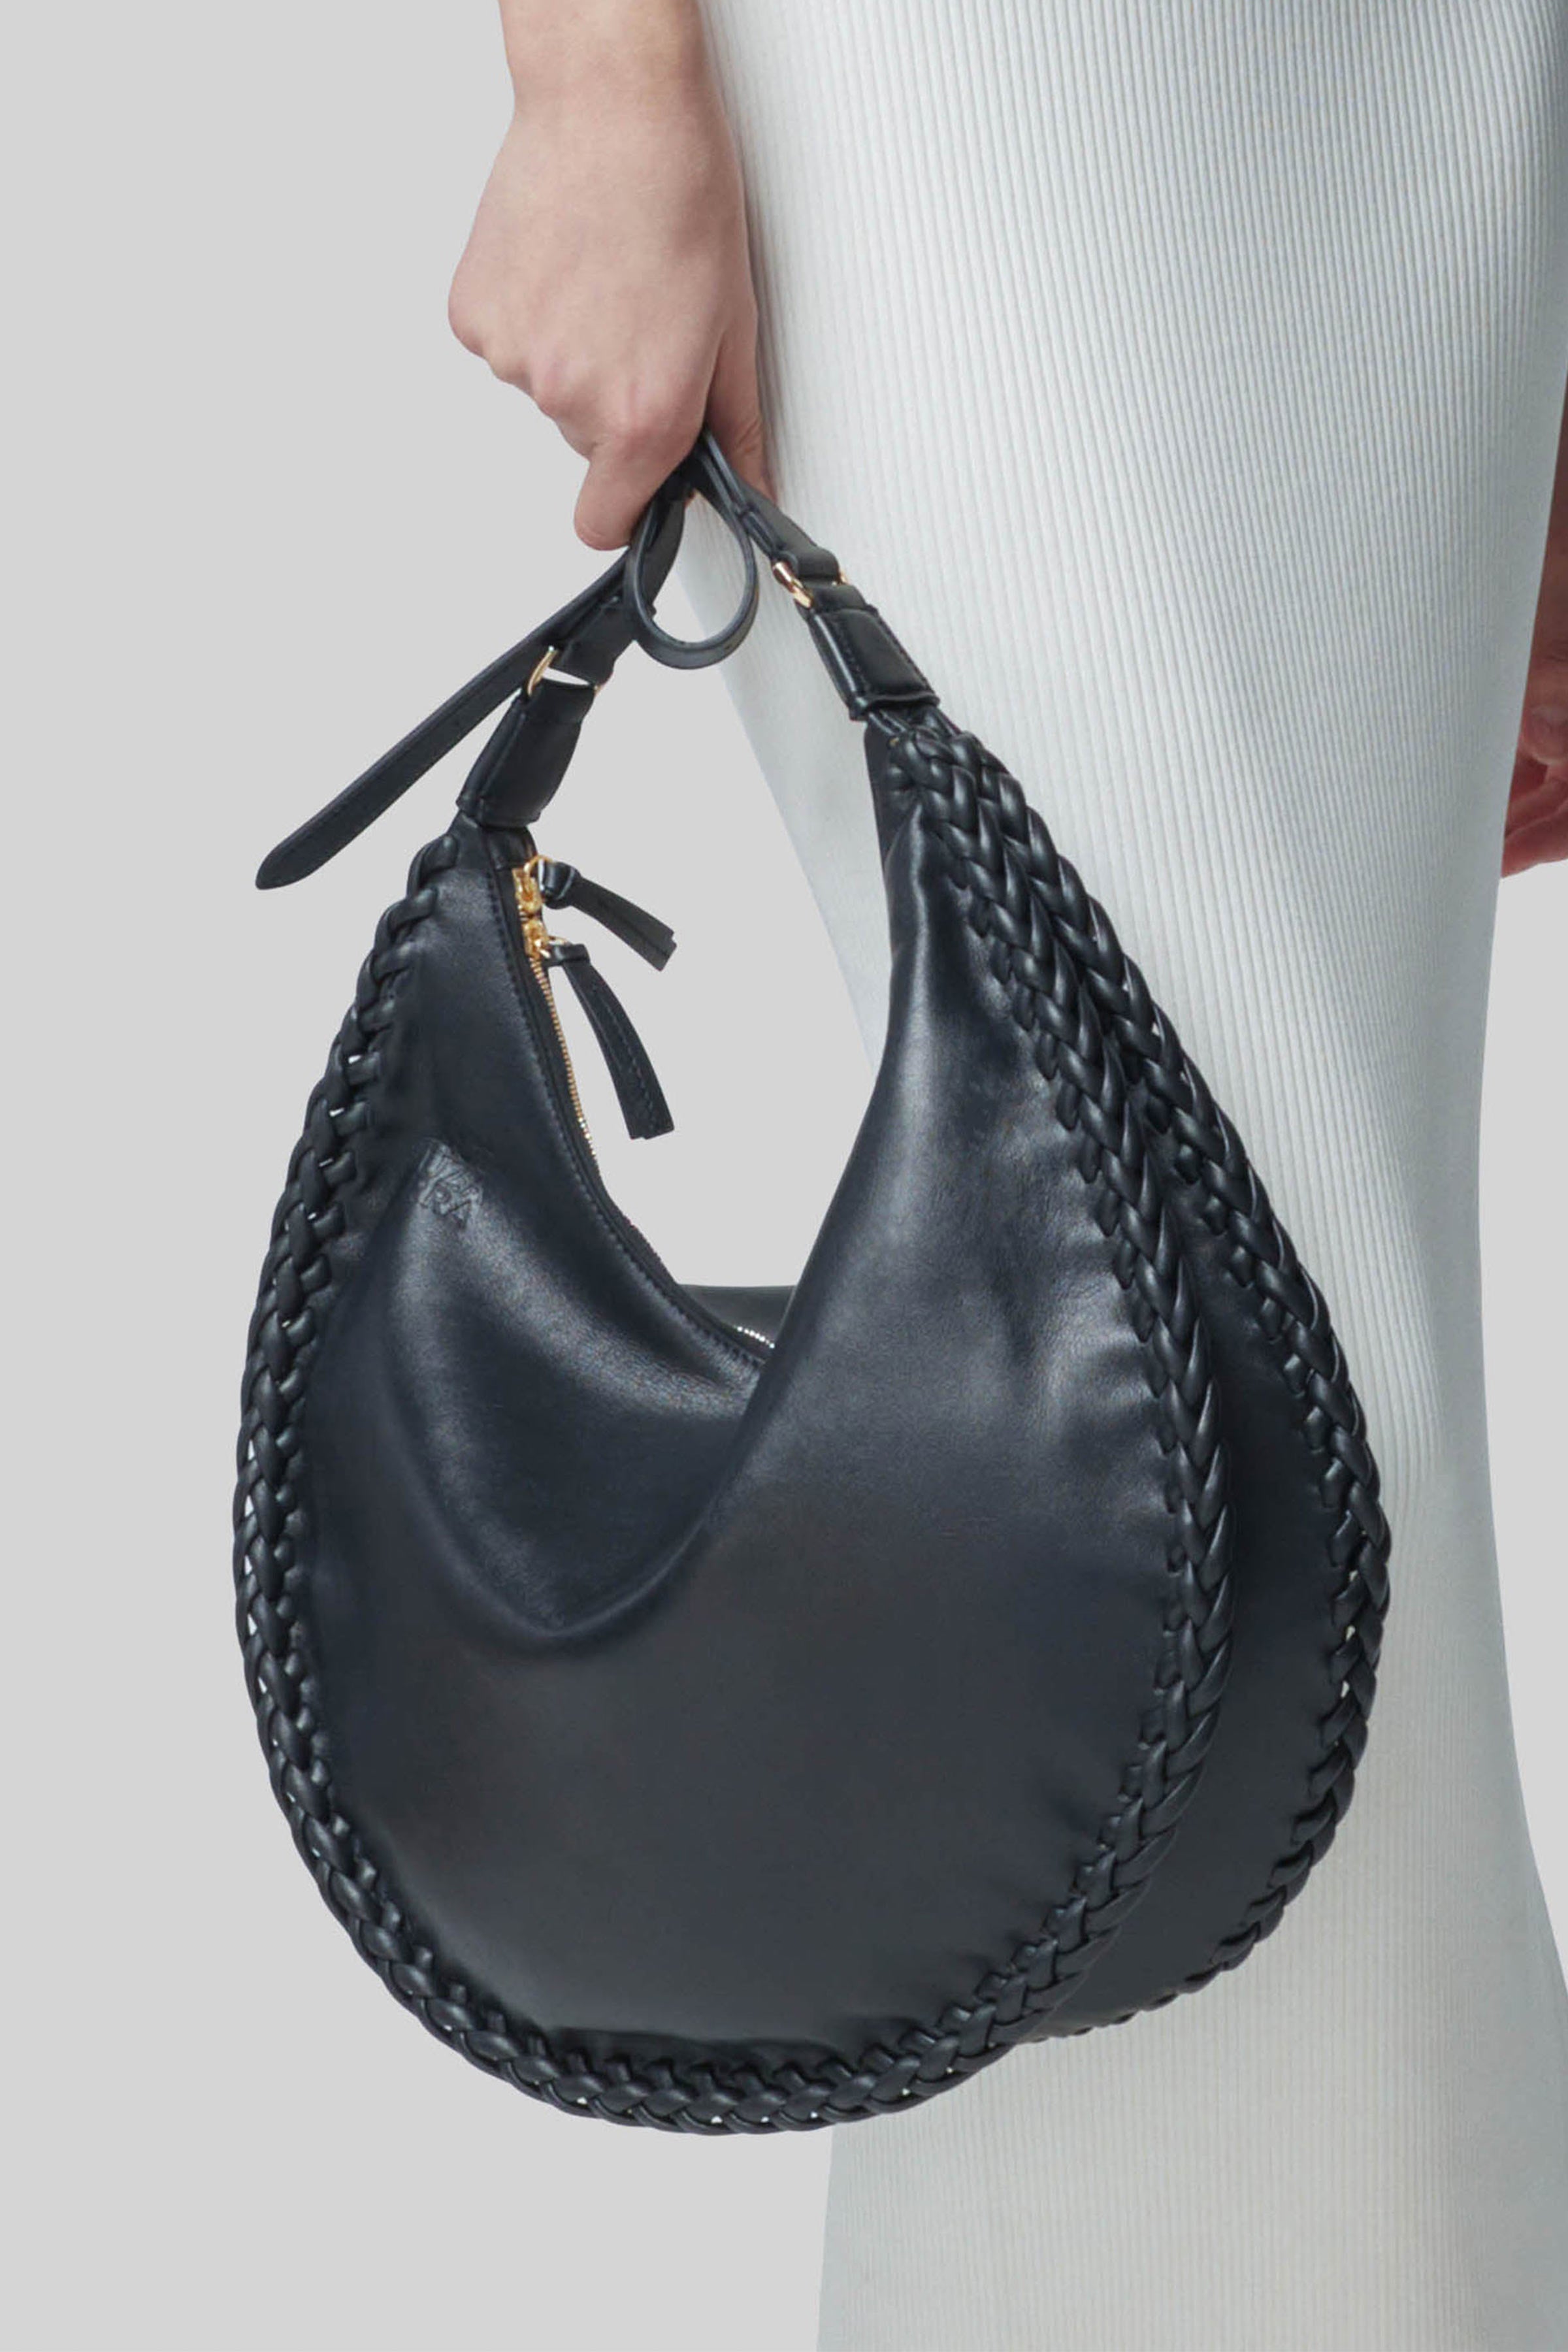 Altuzarra Small Braided Leather Top Handle Bag Black